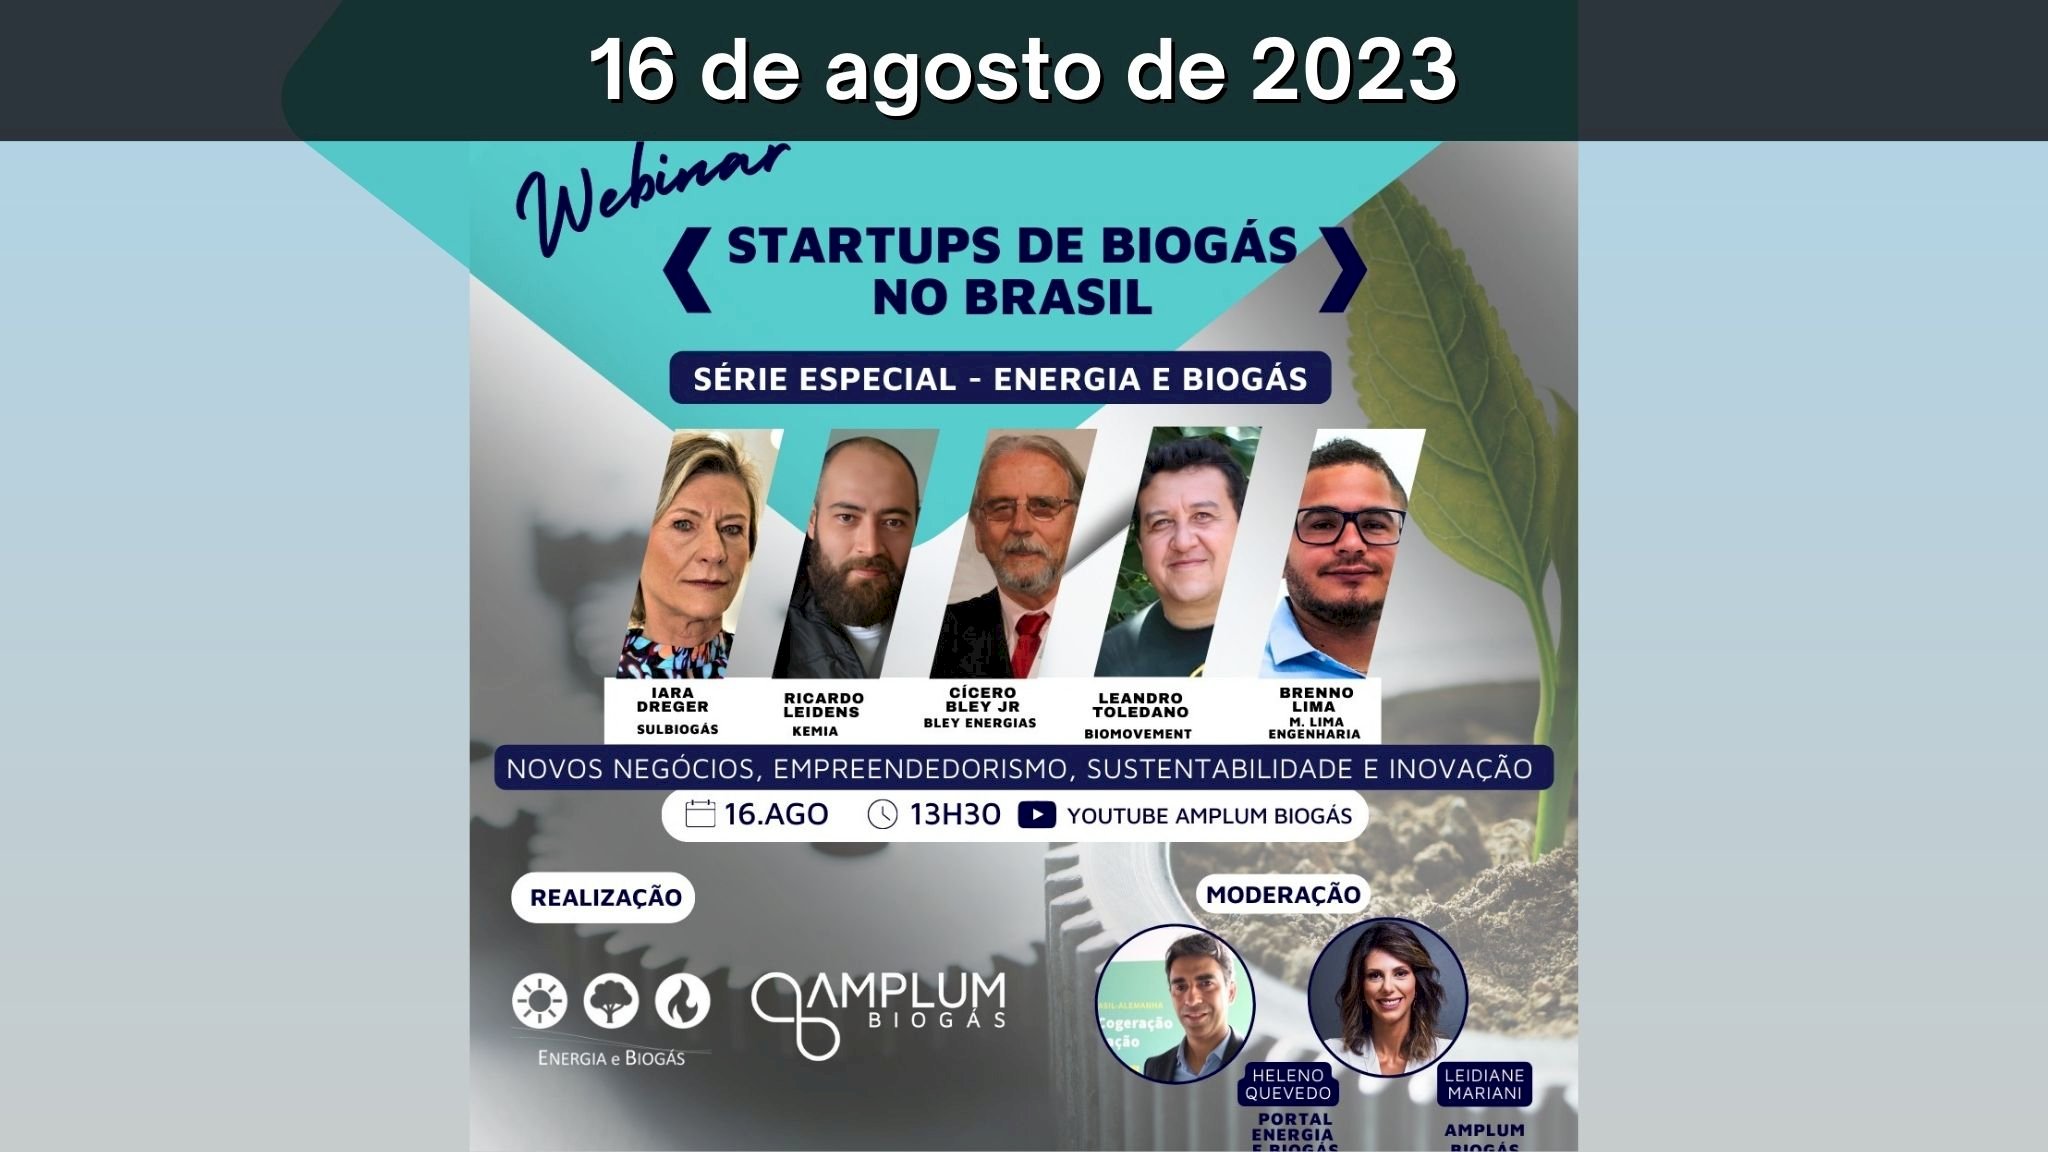 Webinar Startups de Biogás no Brasil